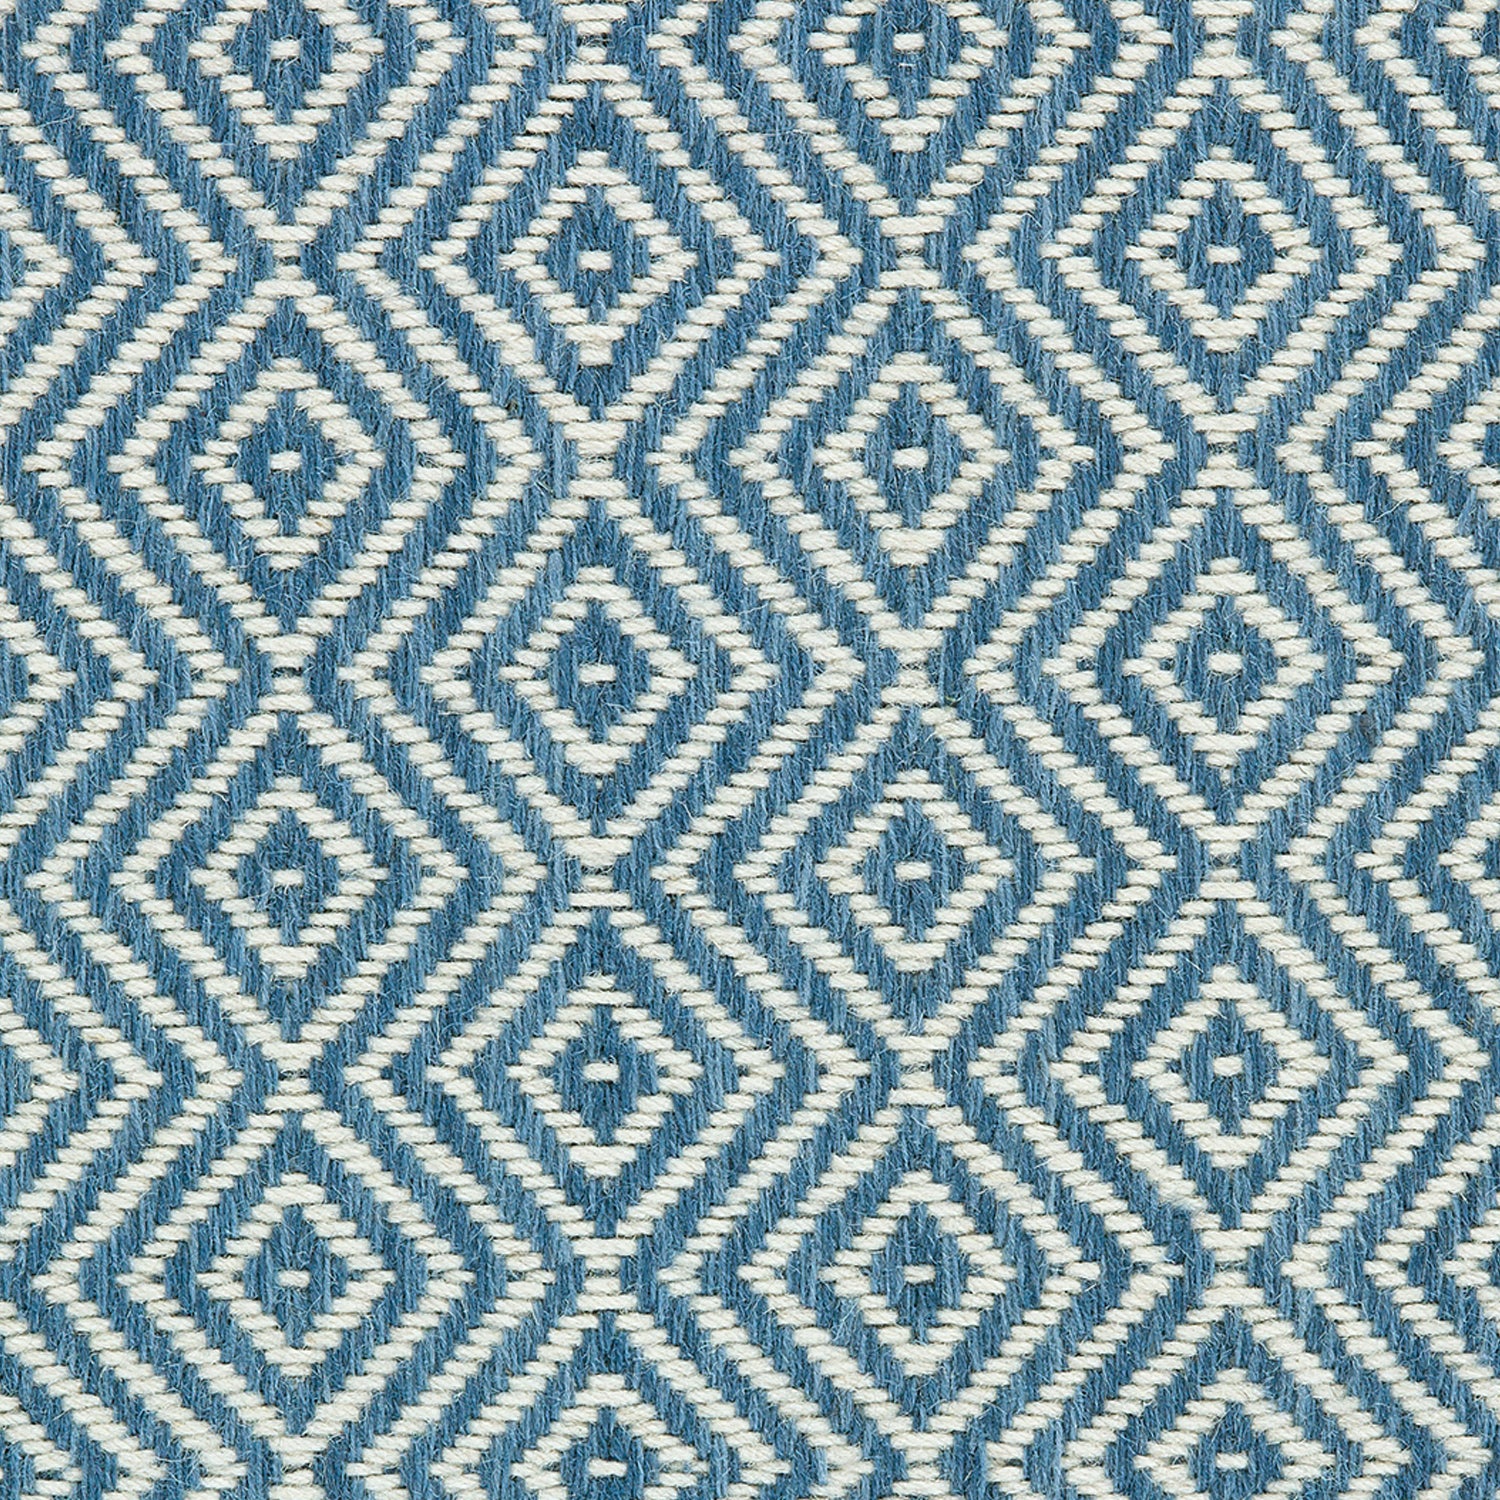 Wool broadloom carpet swatch in a diamond lattice weave in blue and cream.